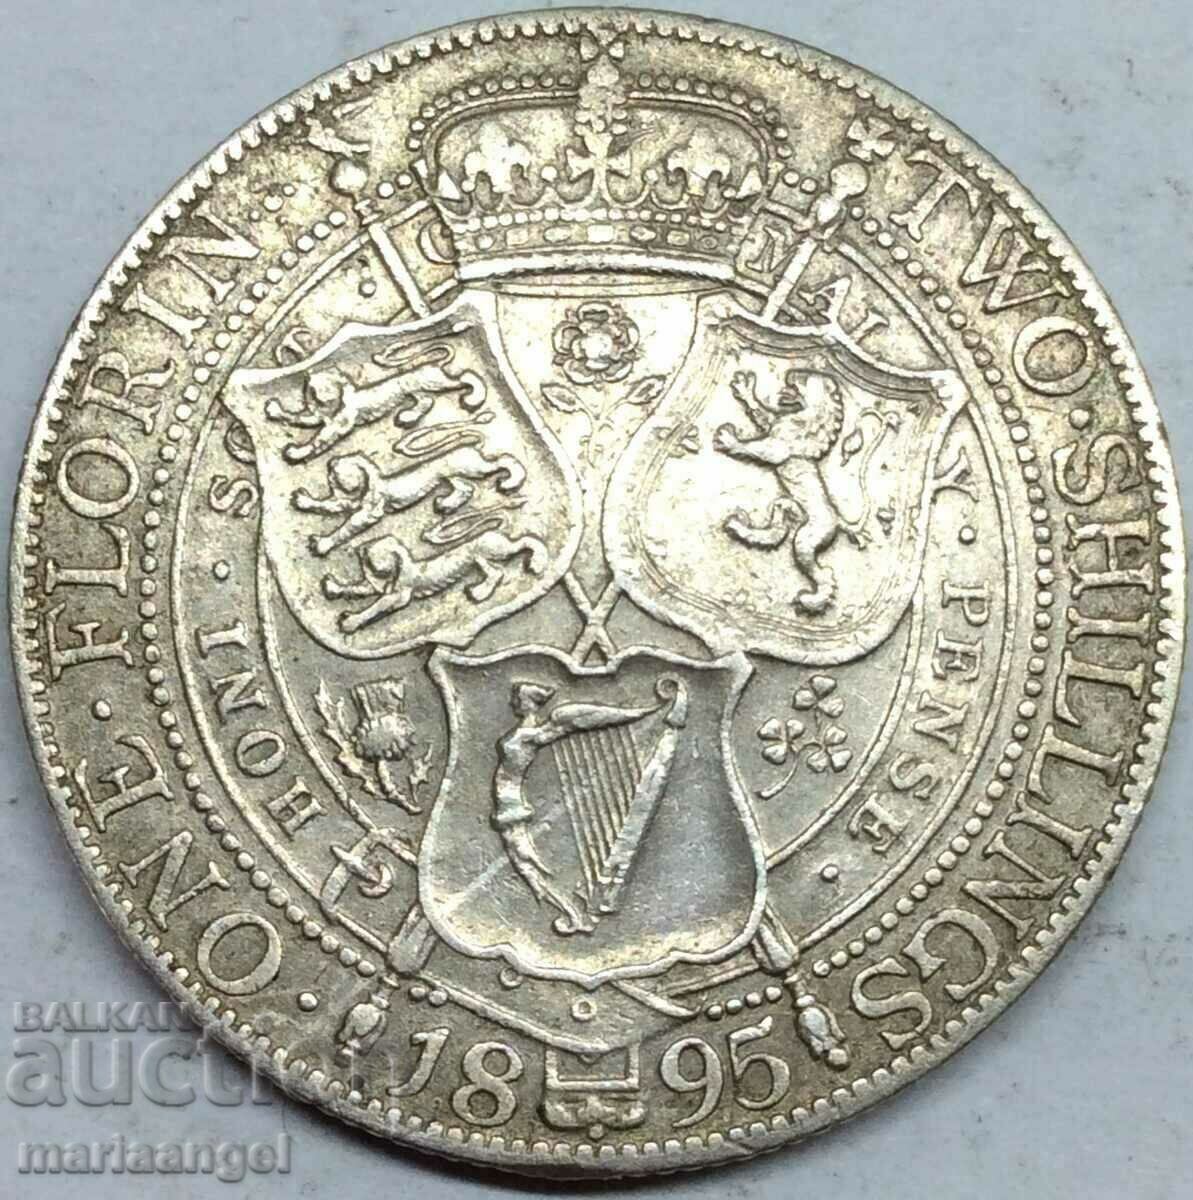 Marea Britanie 1 Florin 2 Shillings 1895 28mm 11.26g Argint